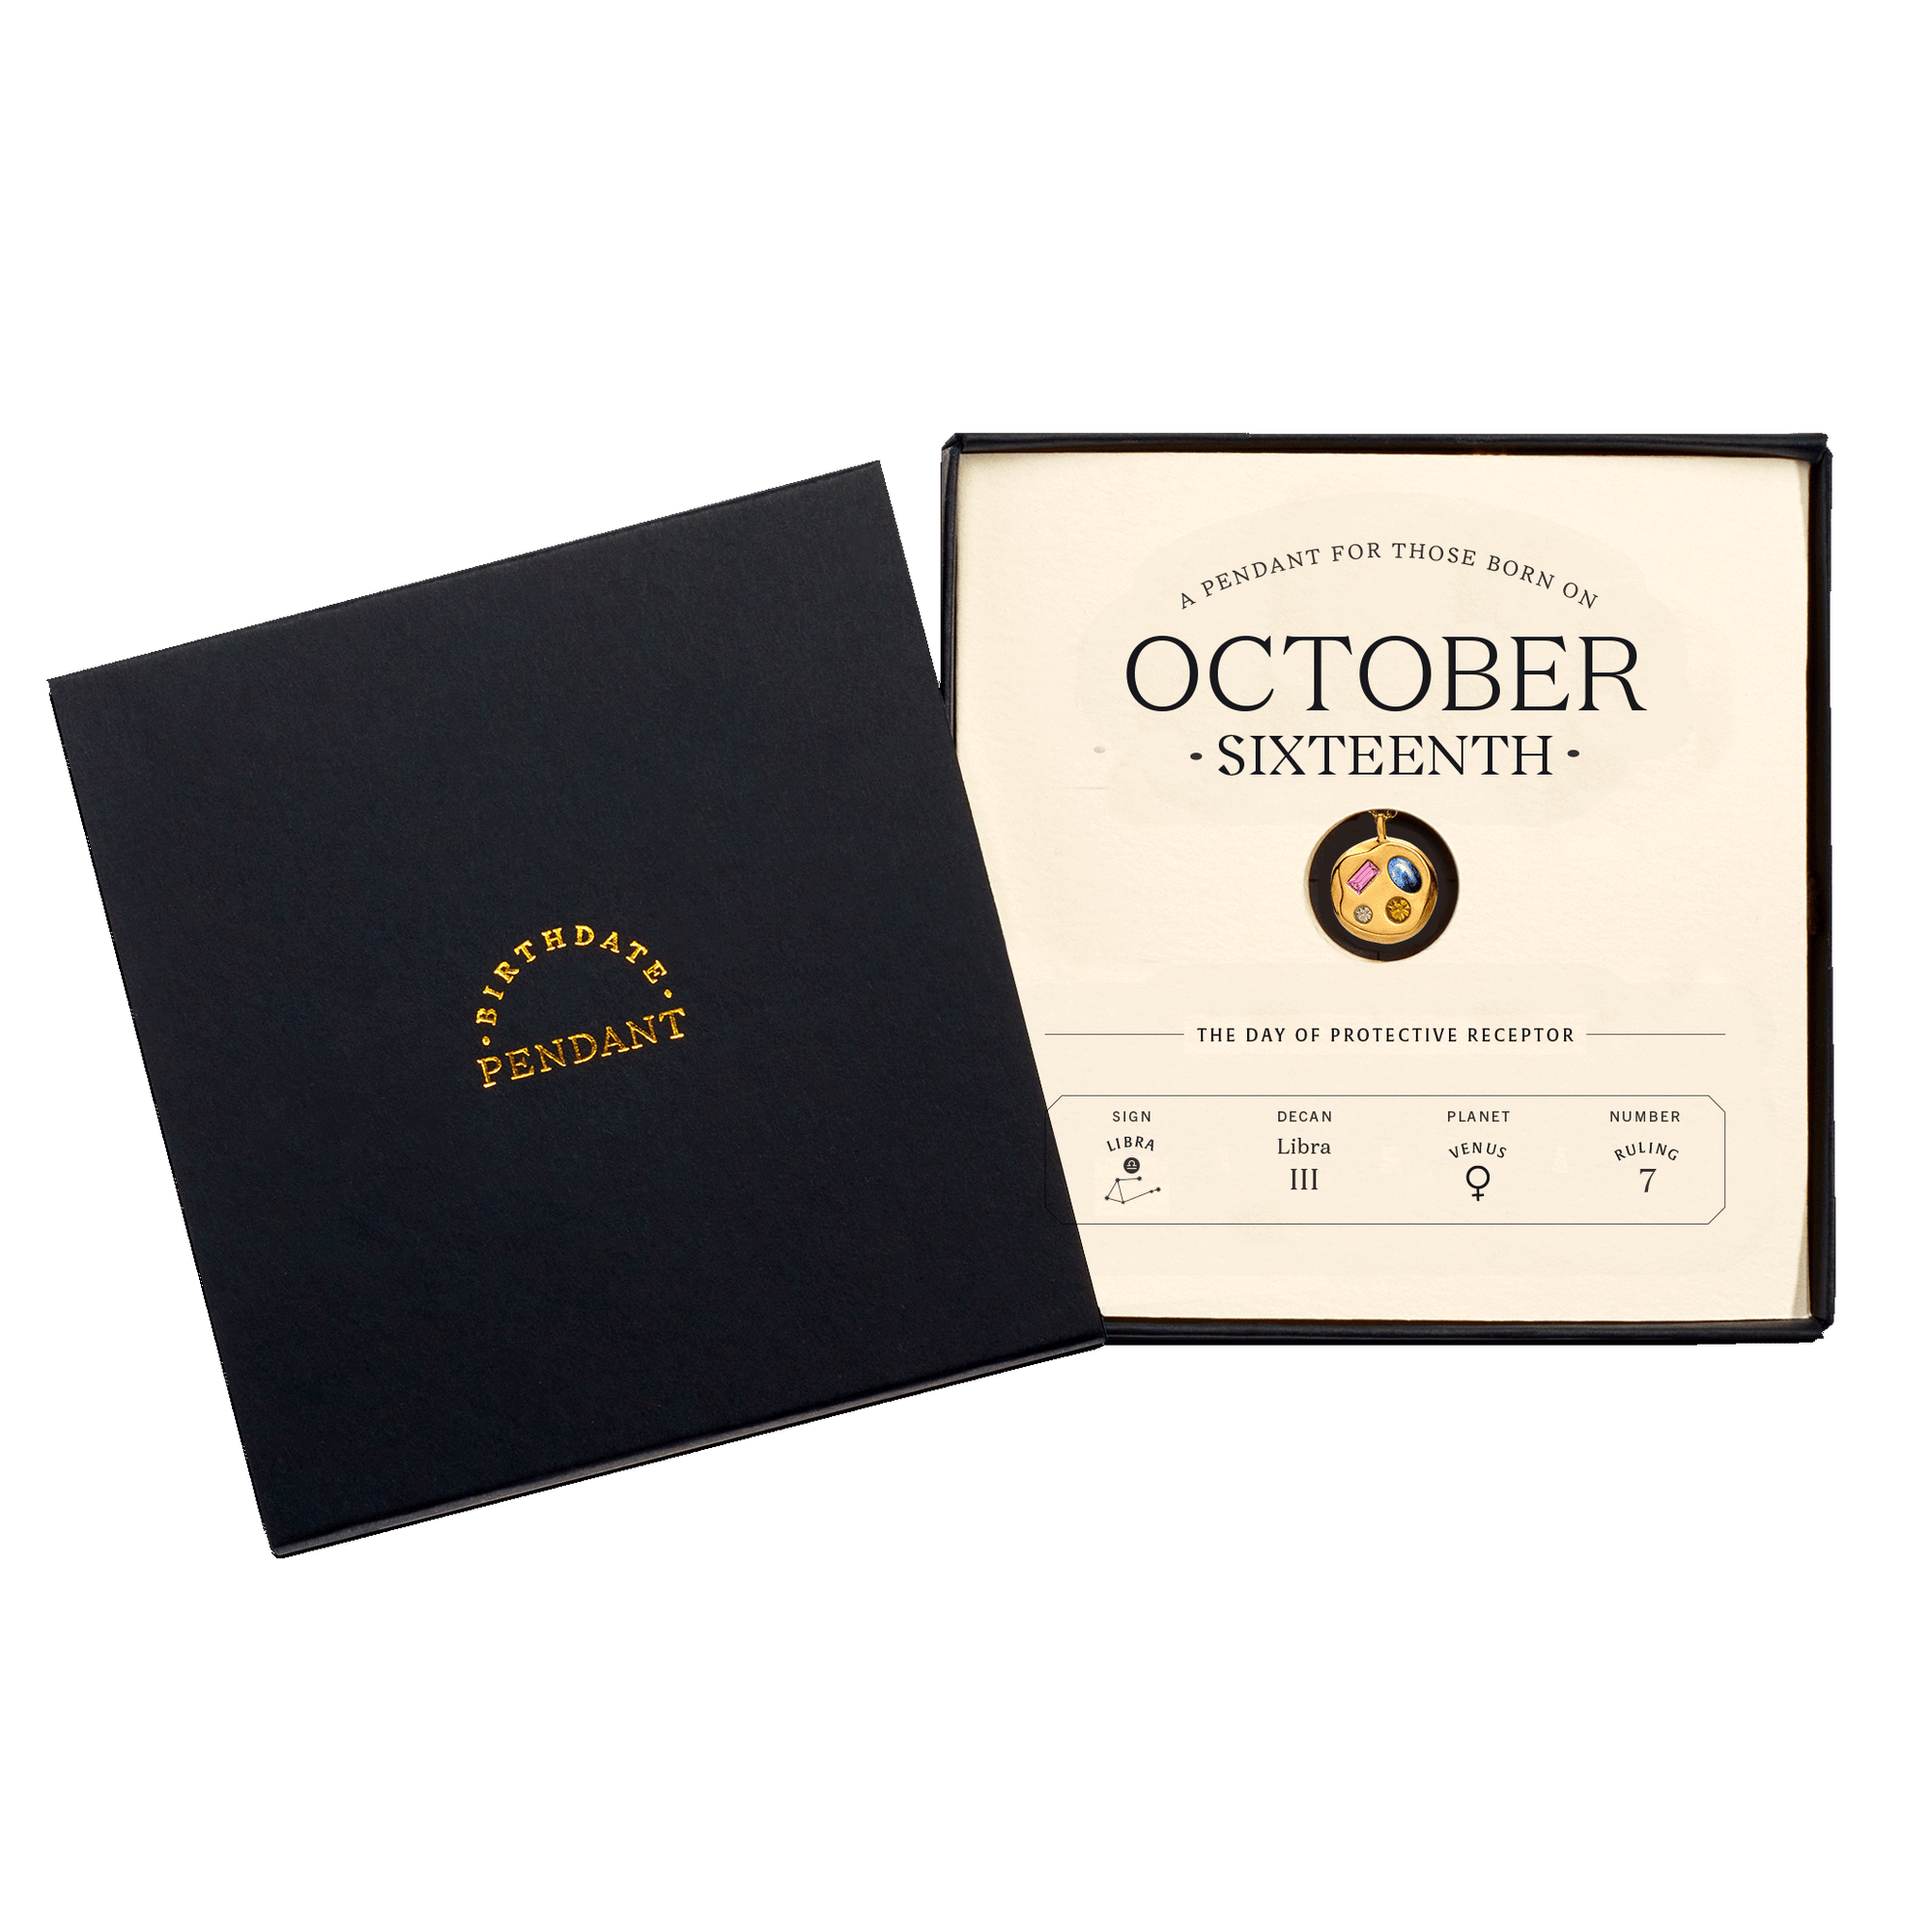 The October Sixteenth Pendant inside its box